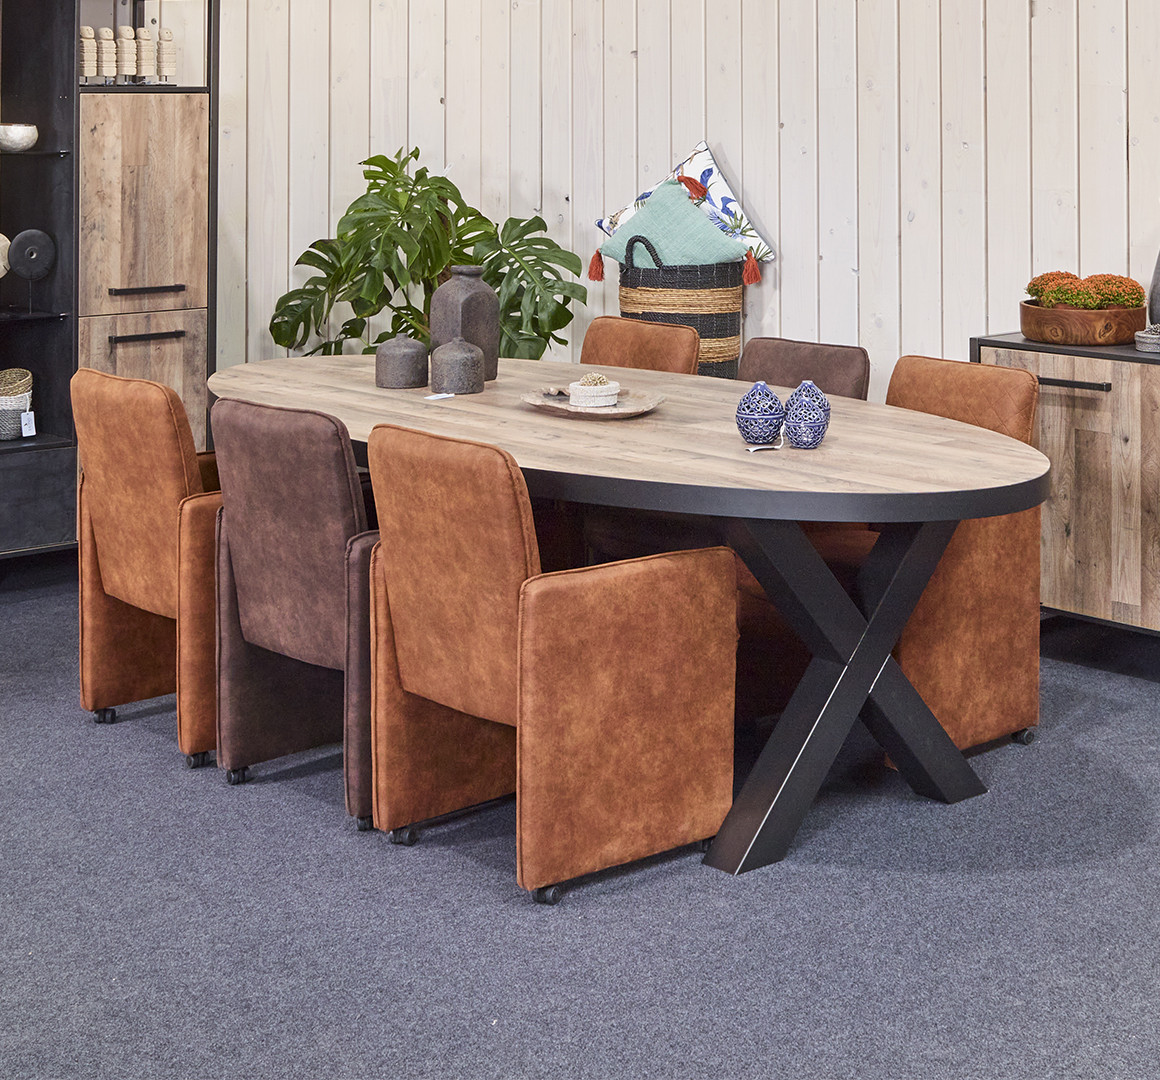 Mobilier industriel - Grande table d'atelier en bois